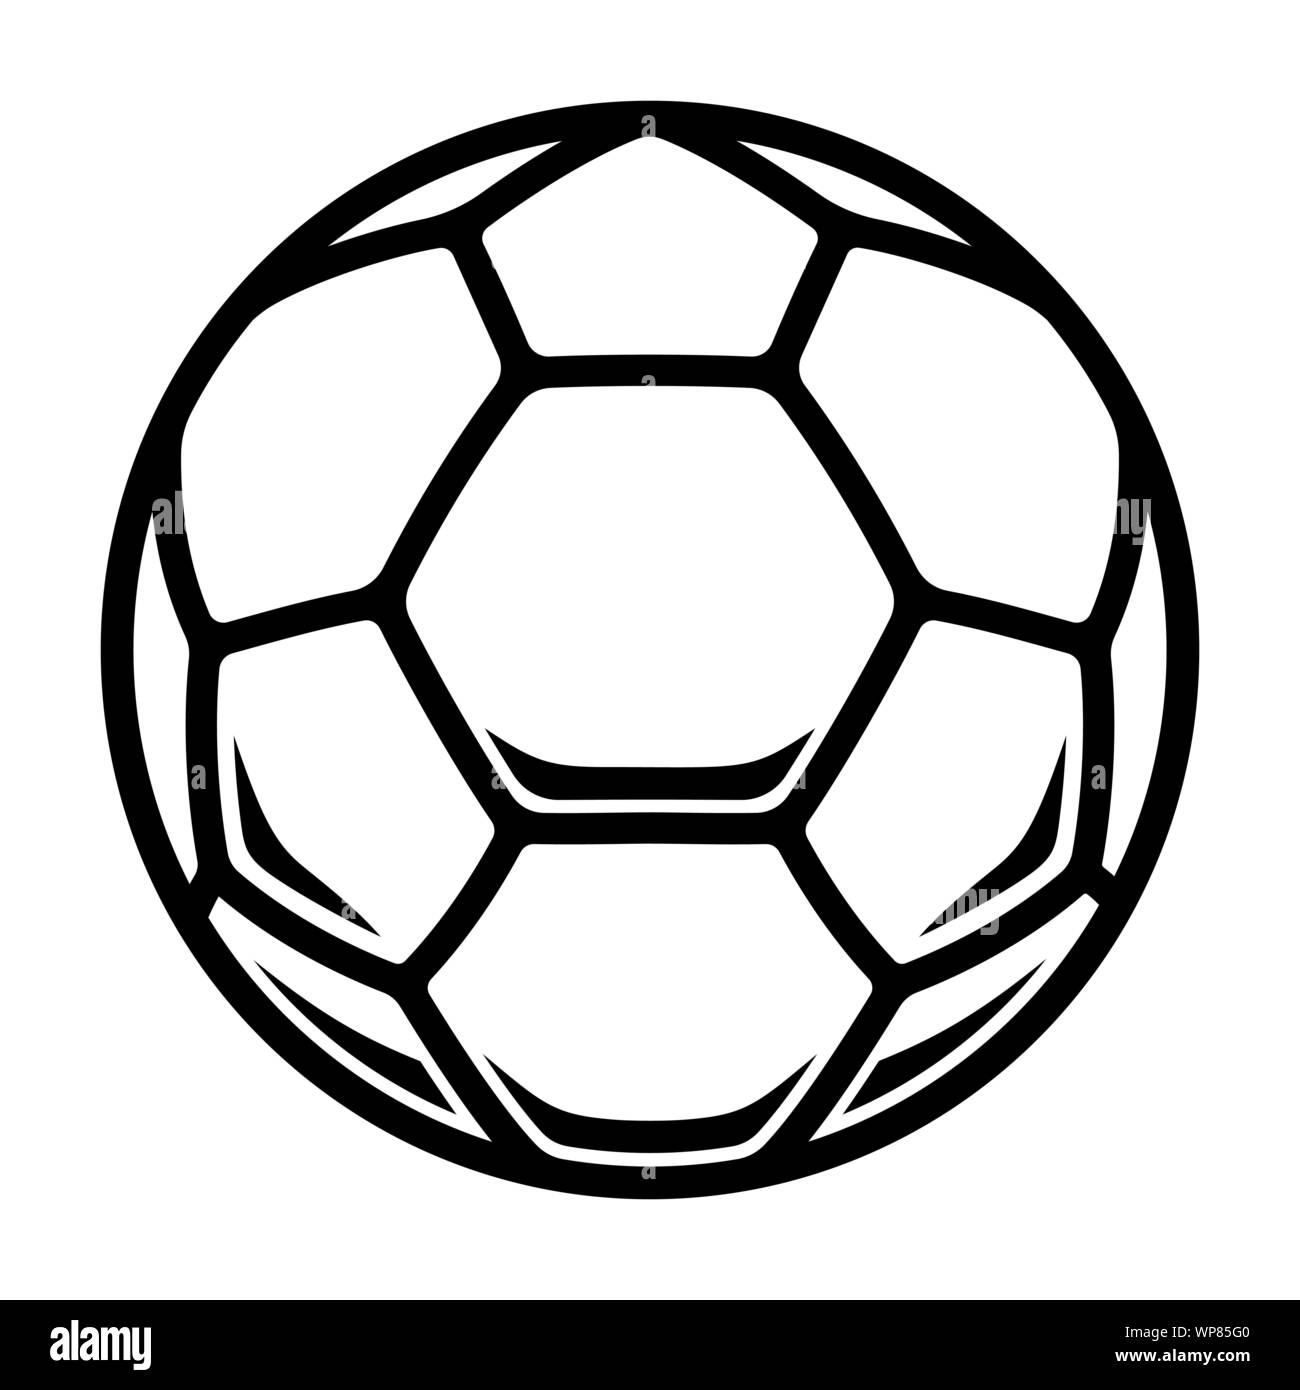 Soccer ball icon. European football ball. Black and white vector illustration Stock Vector